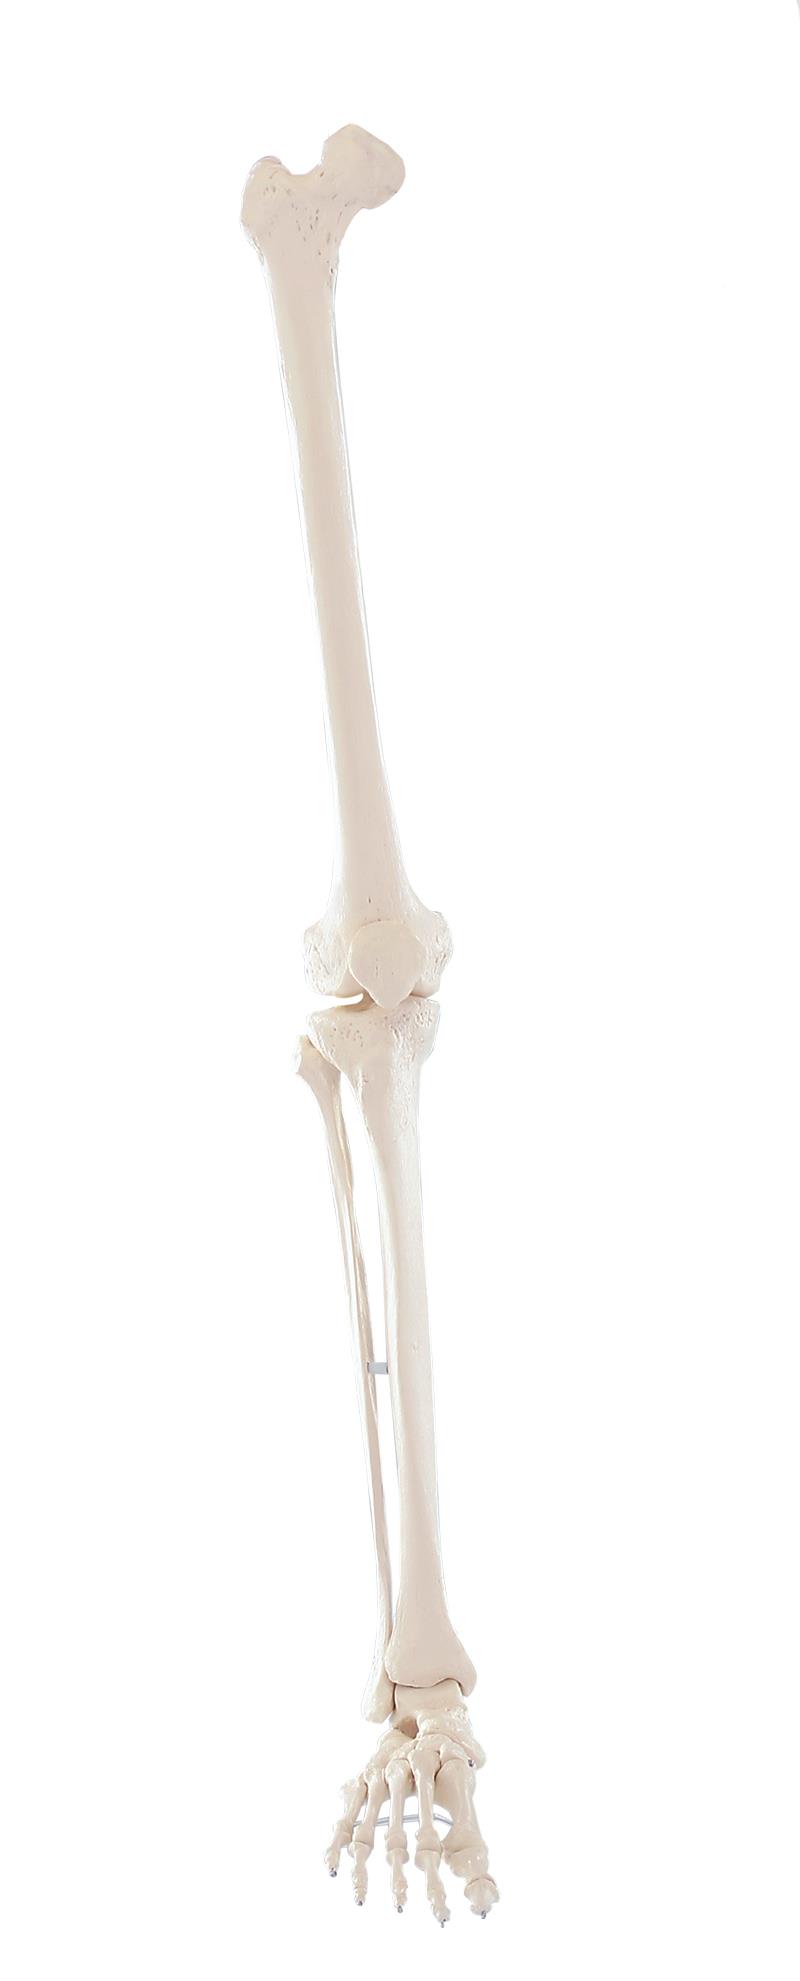 Skeleton of leg